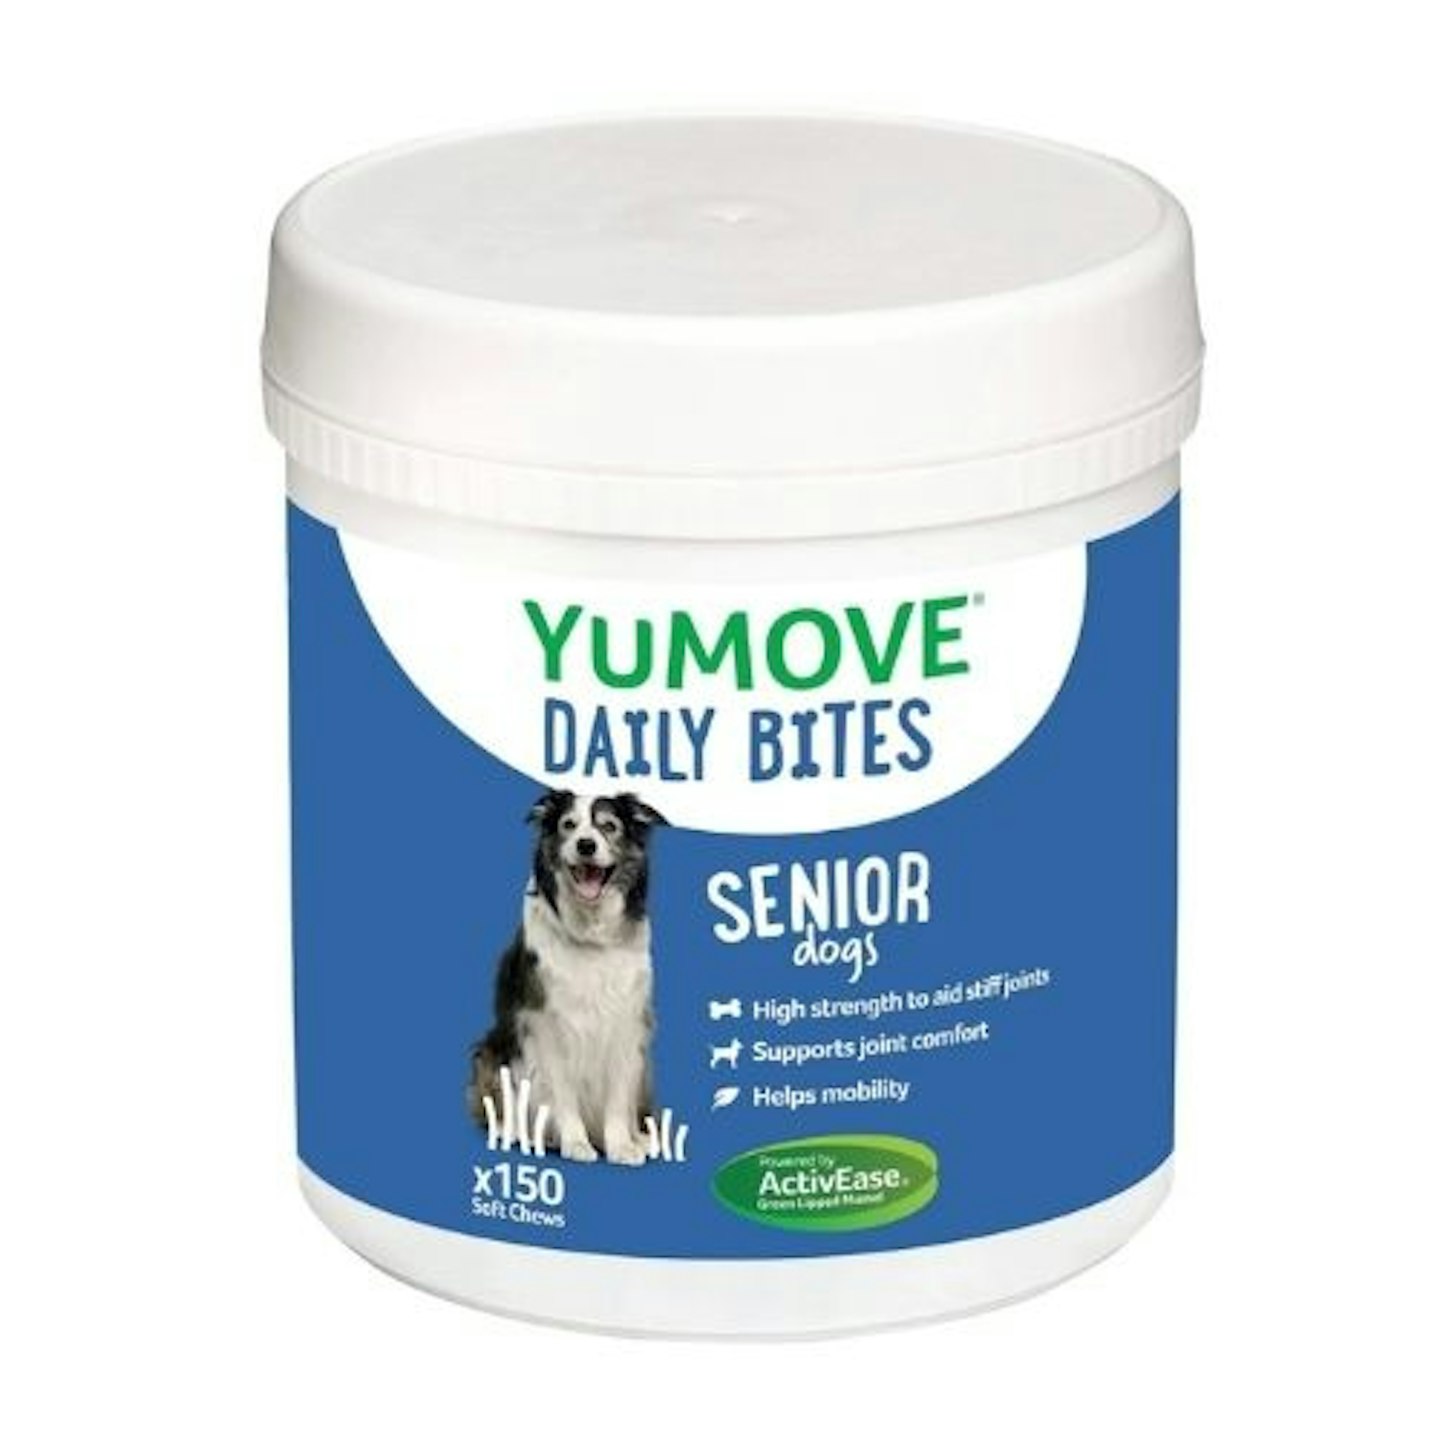 YuMOVE Daily Bites for Senior Dogs